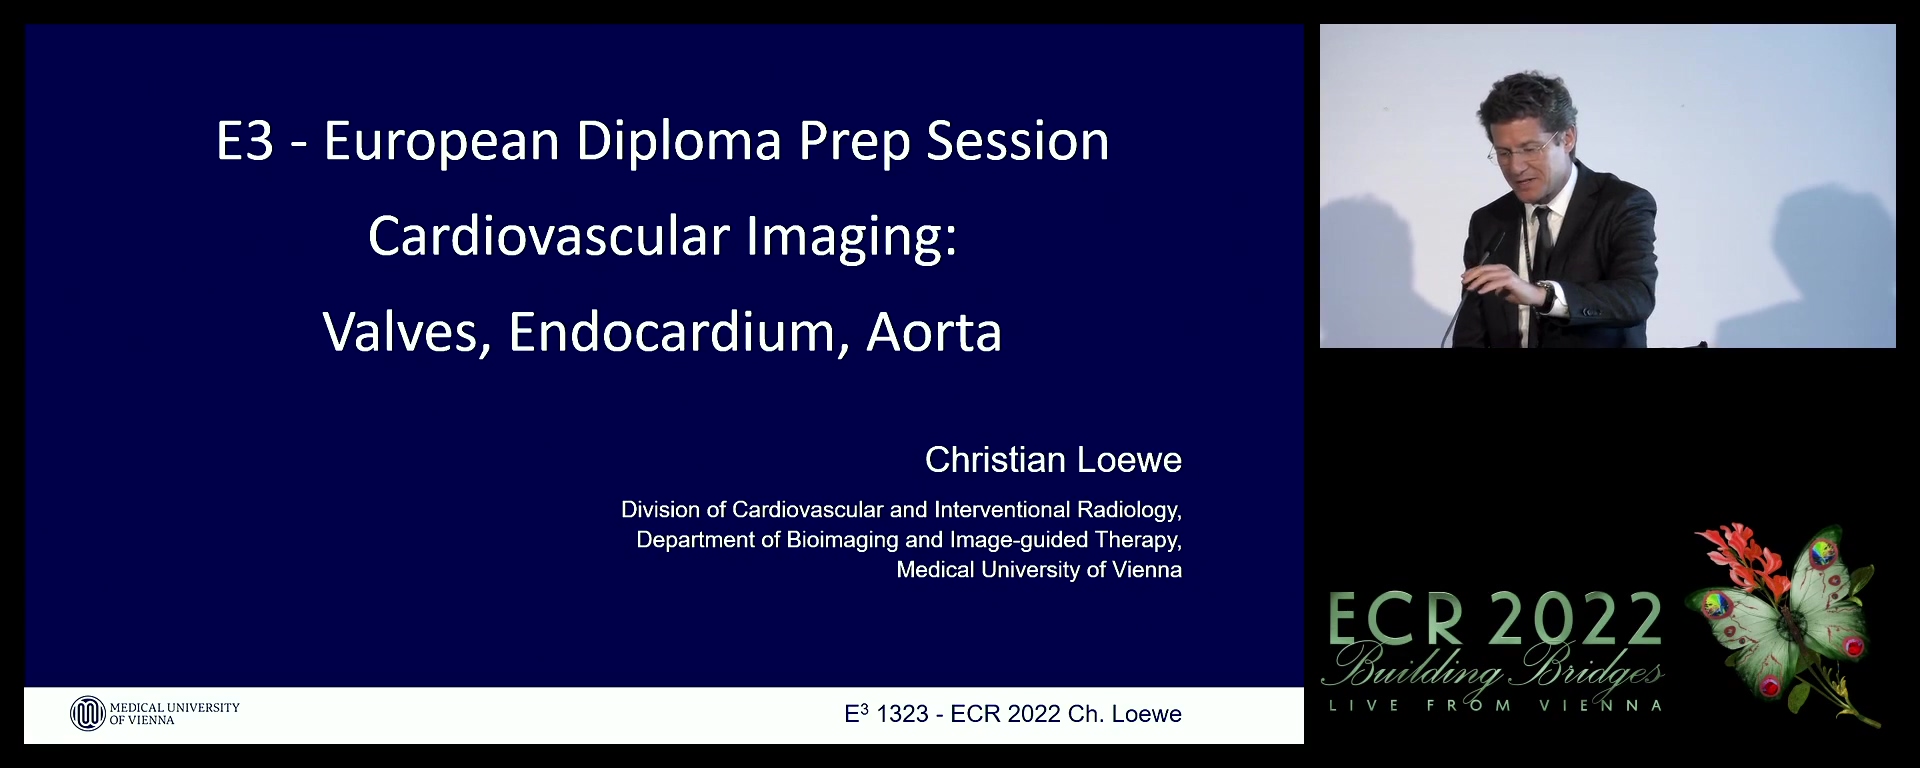 Cardiovascular imaging: valves, endocardium, and aorta